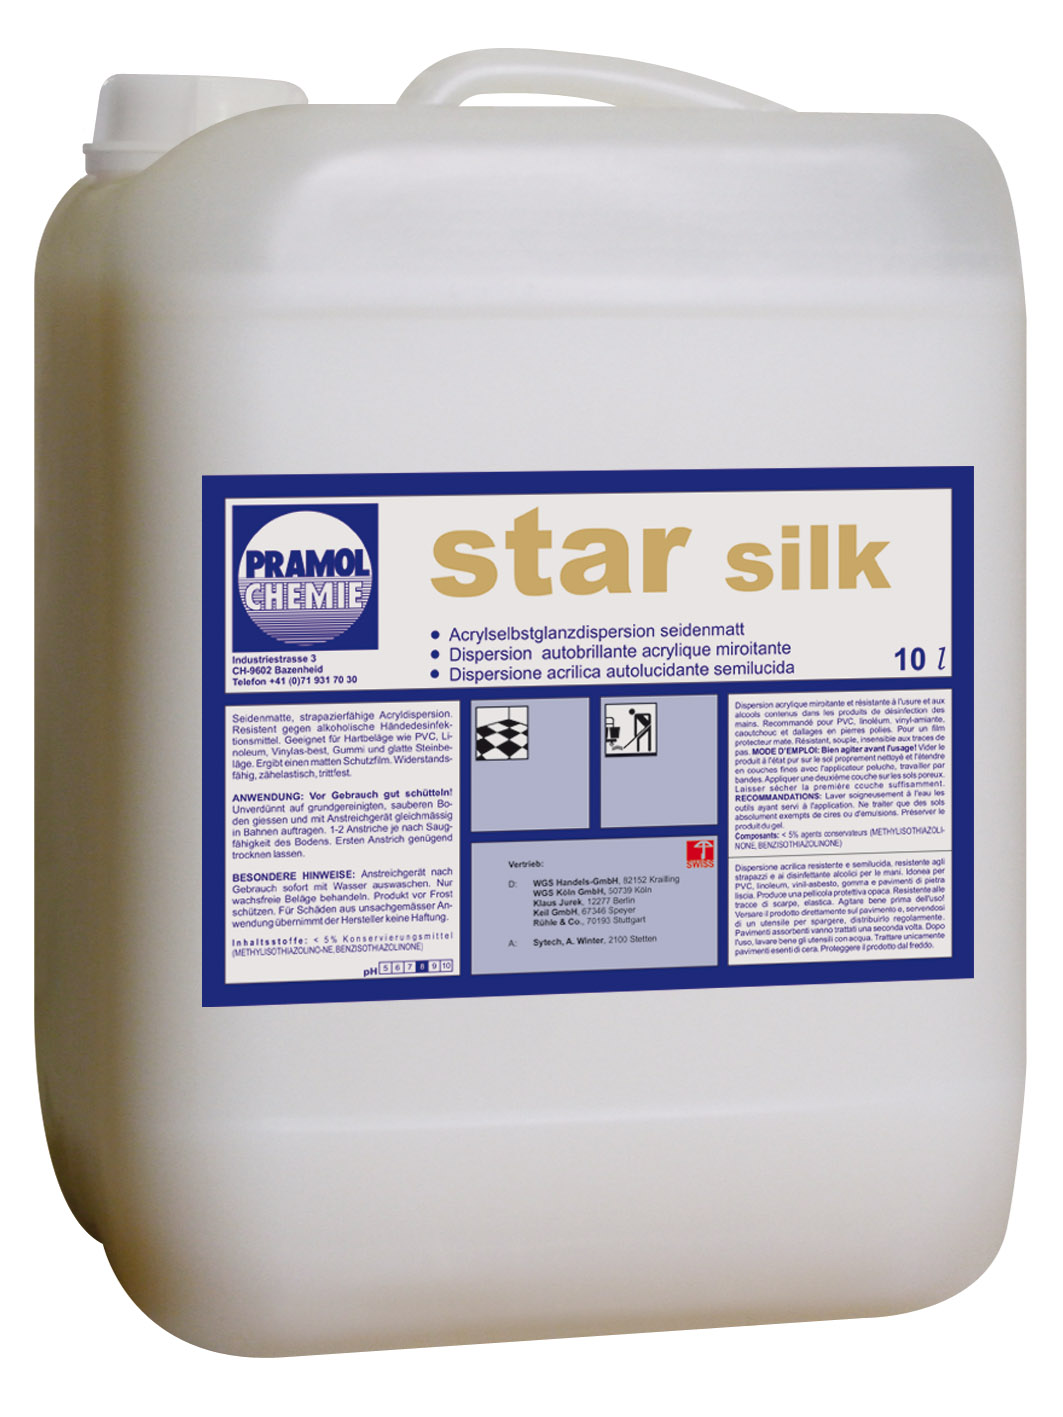 Pramol star silk, Acryldispersion, alkoholbeständig, seidenmatt, weiß, 10 Liter